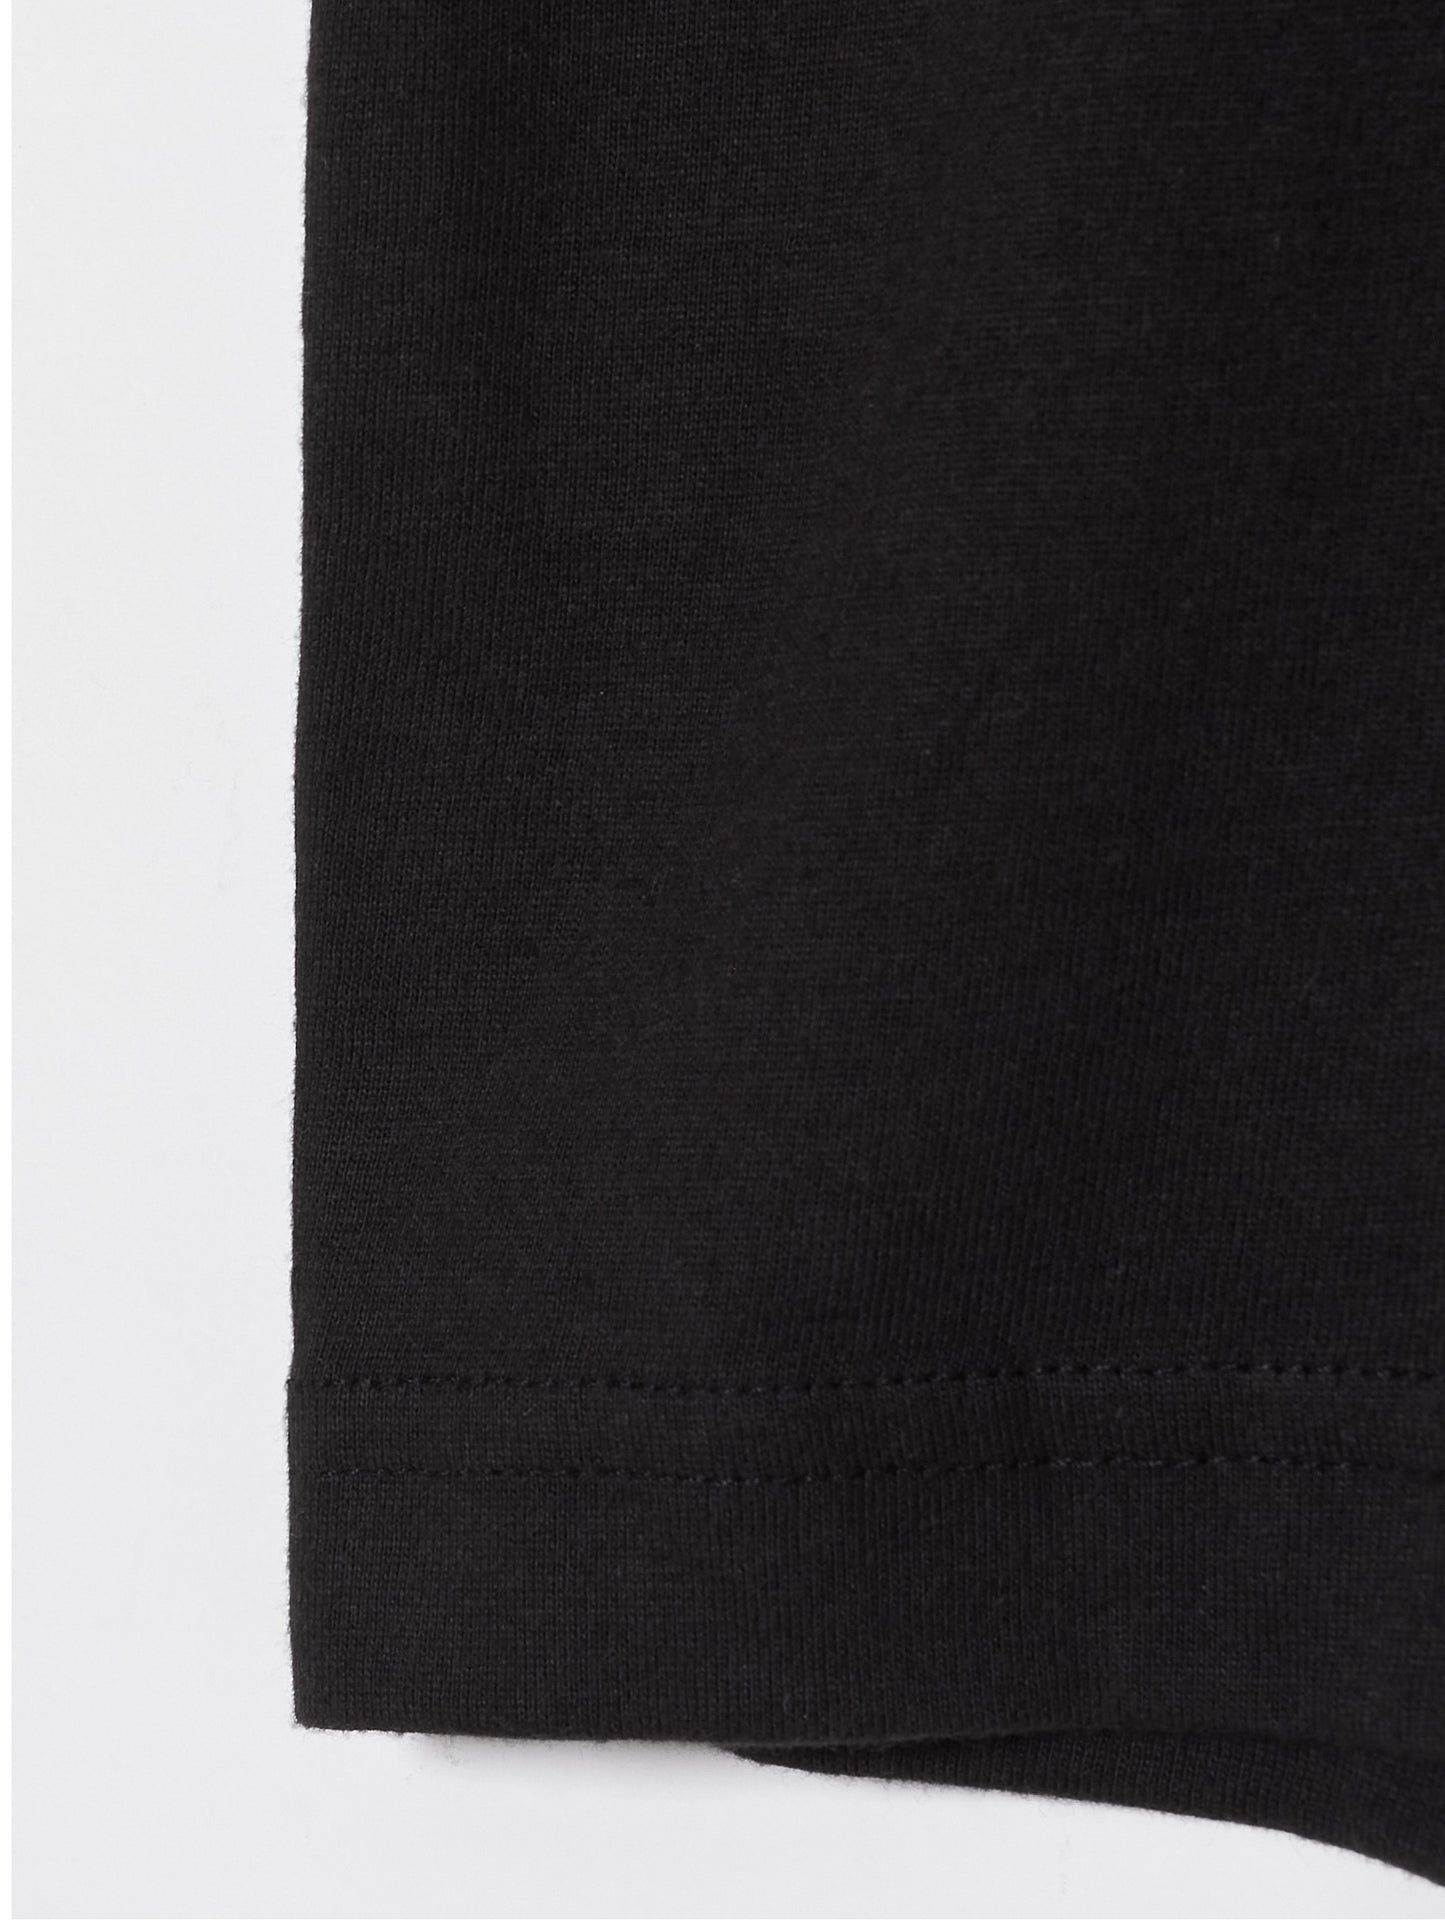 IZAYOI T-shirt Black【Stock】